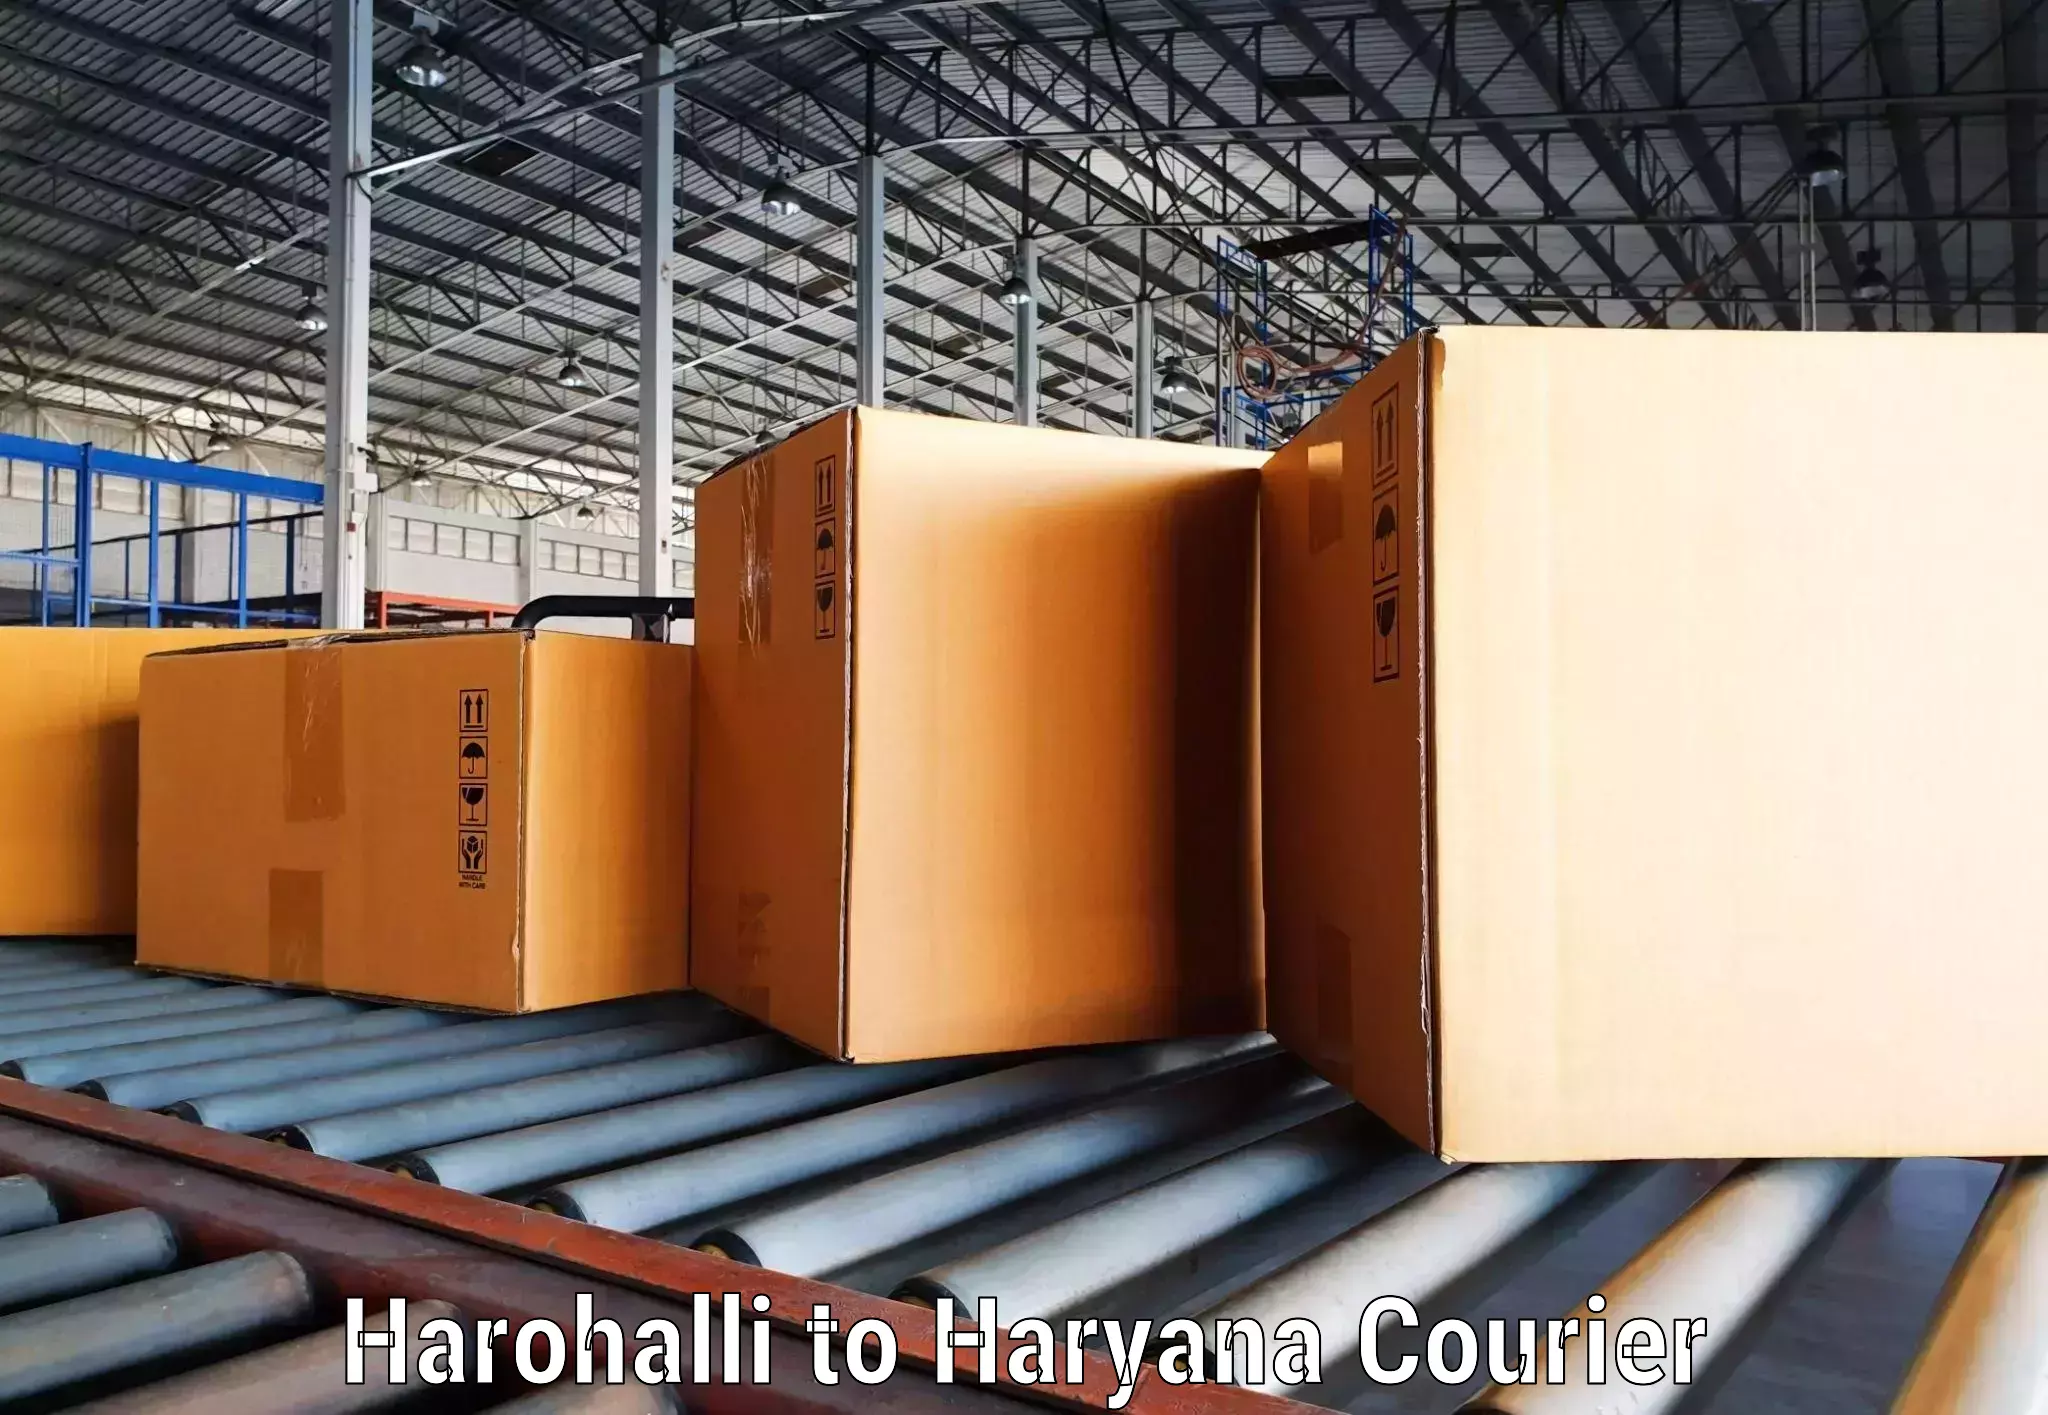 High-performance logistics Harohalli to Siwani